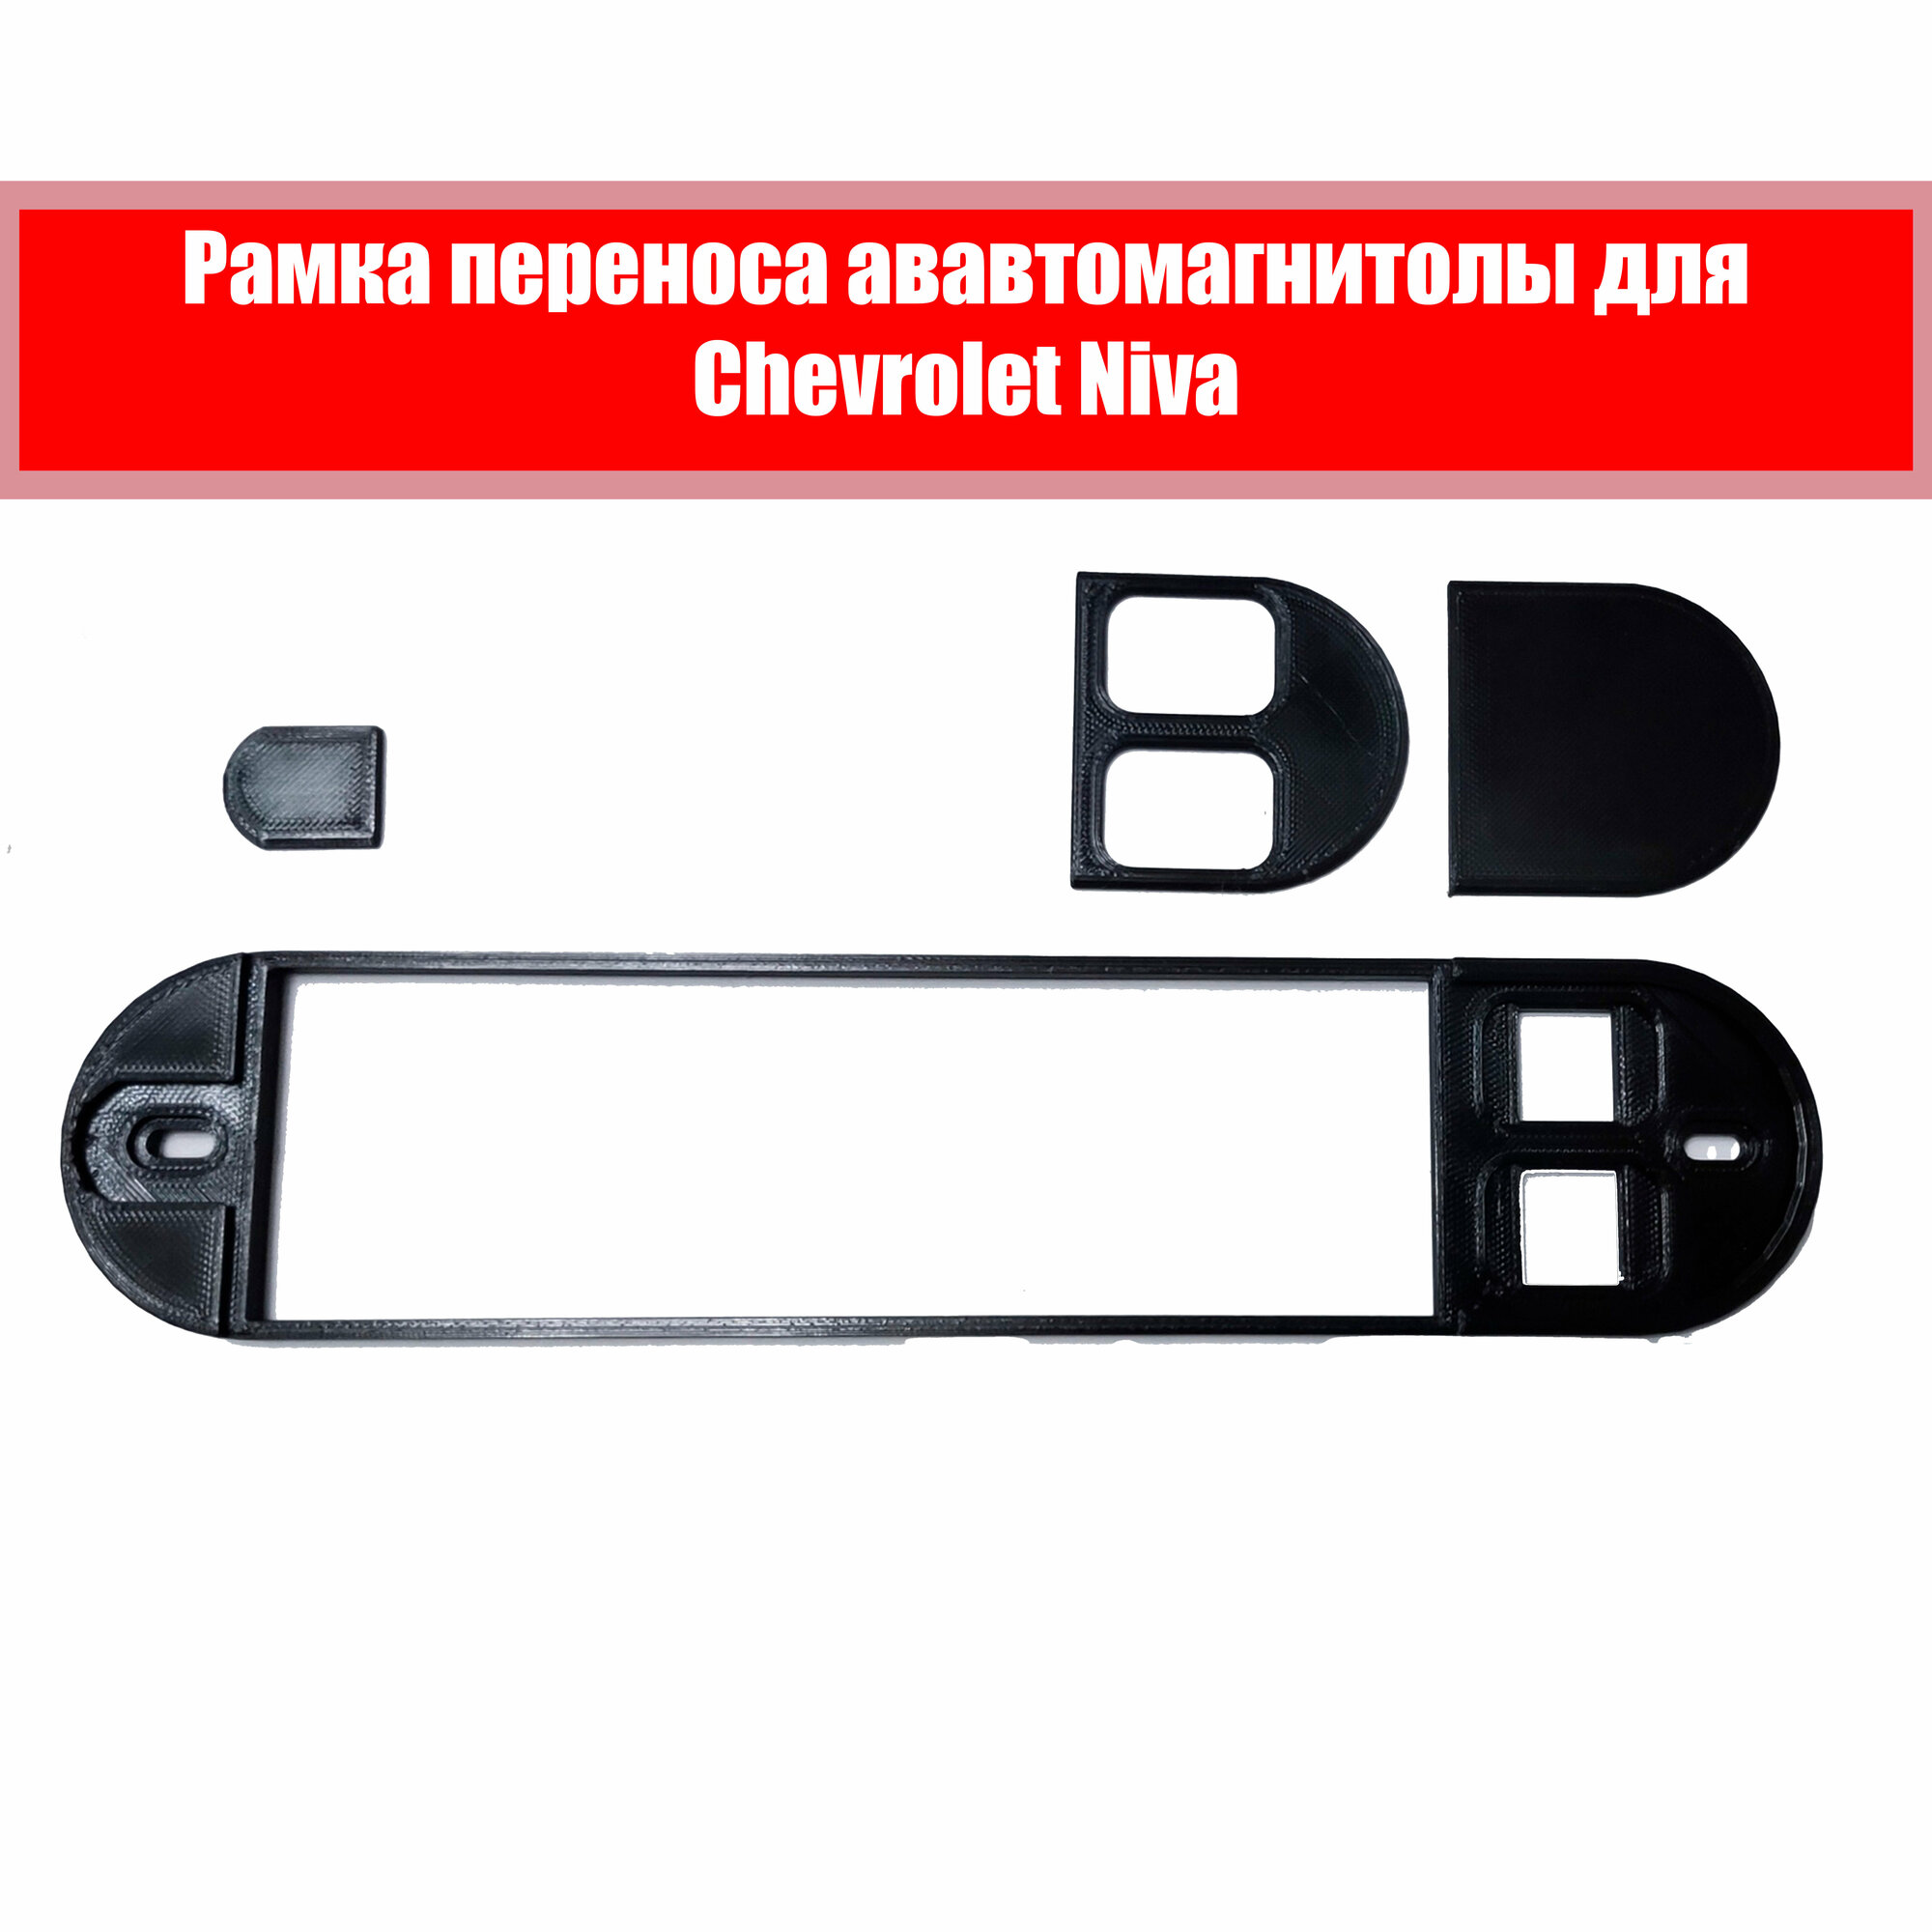 Рамка переноса автомагнитолы для Chevrolet Niva